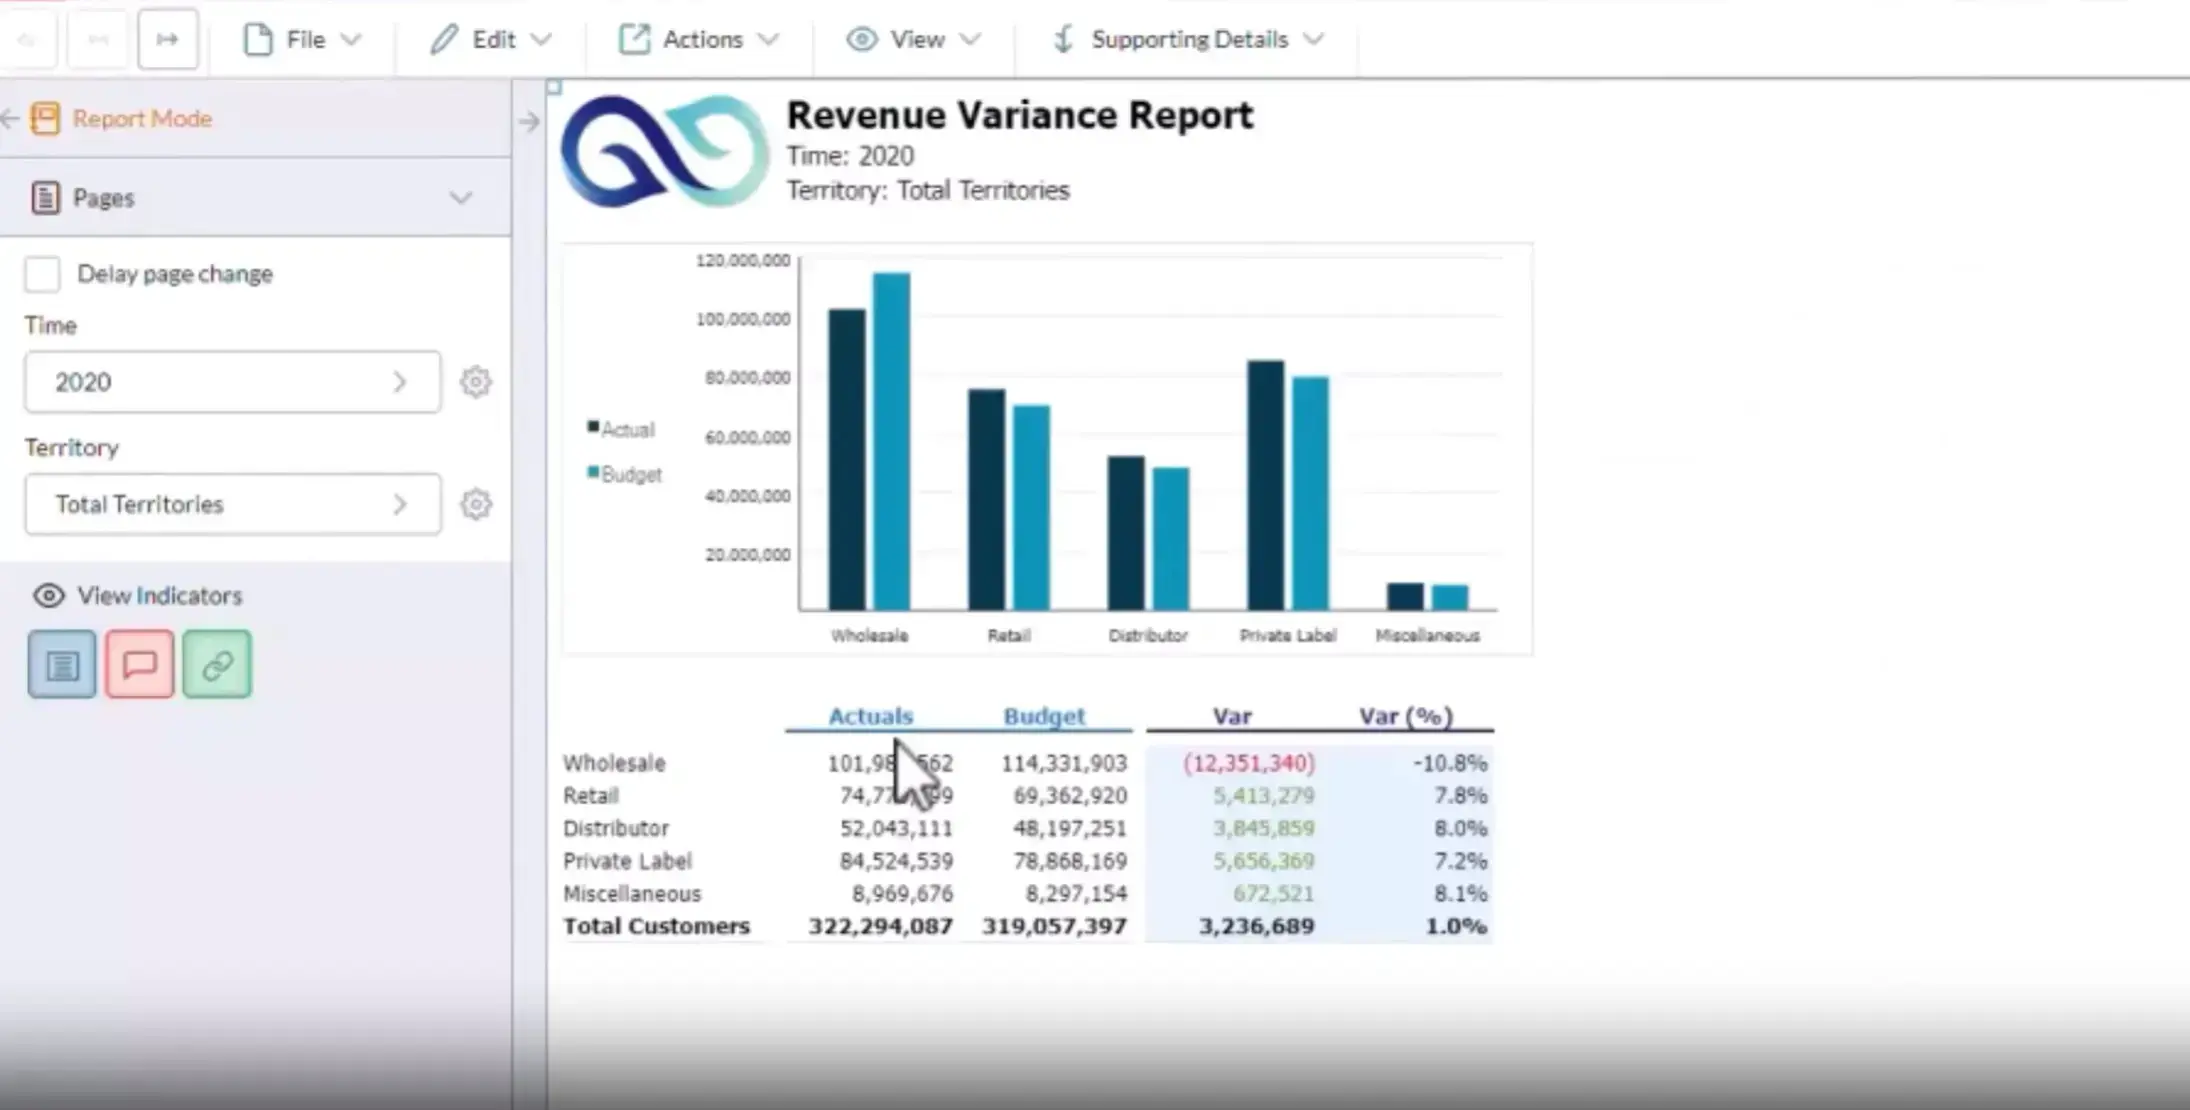 Revenue variance report bar chart